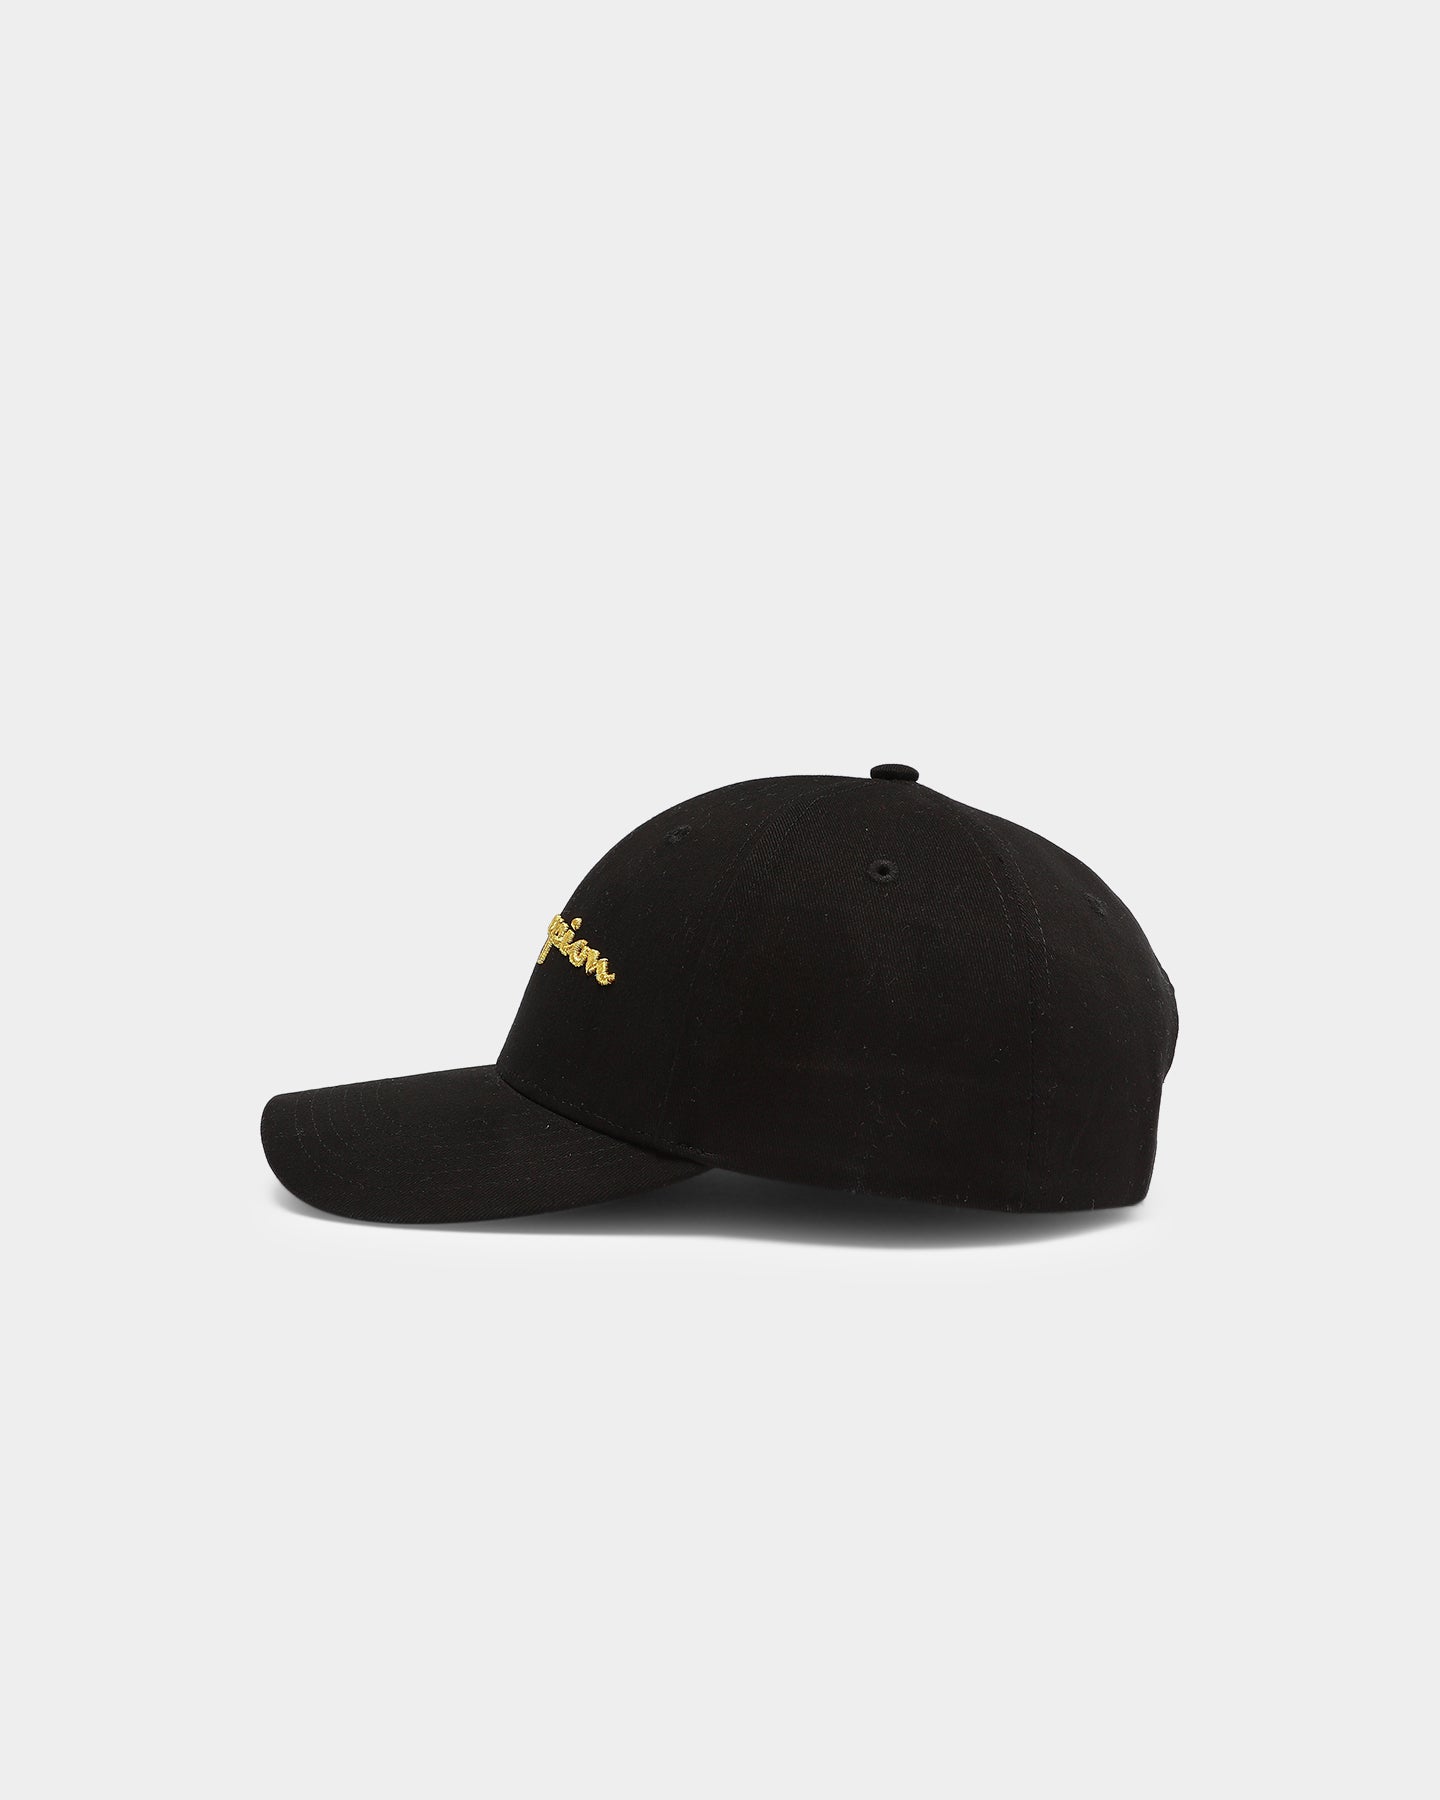 champion hat black